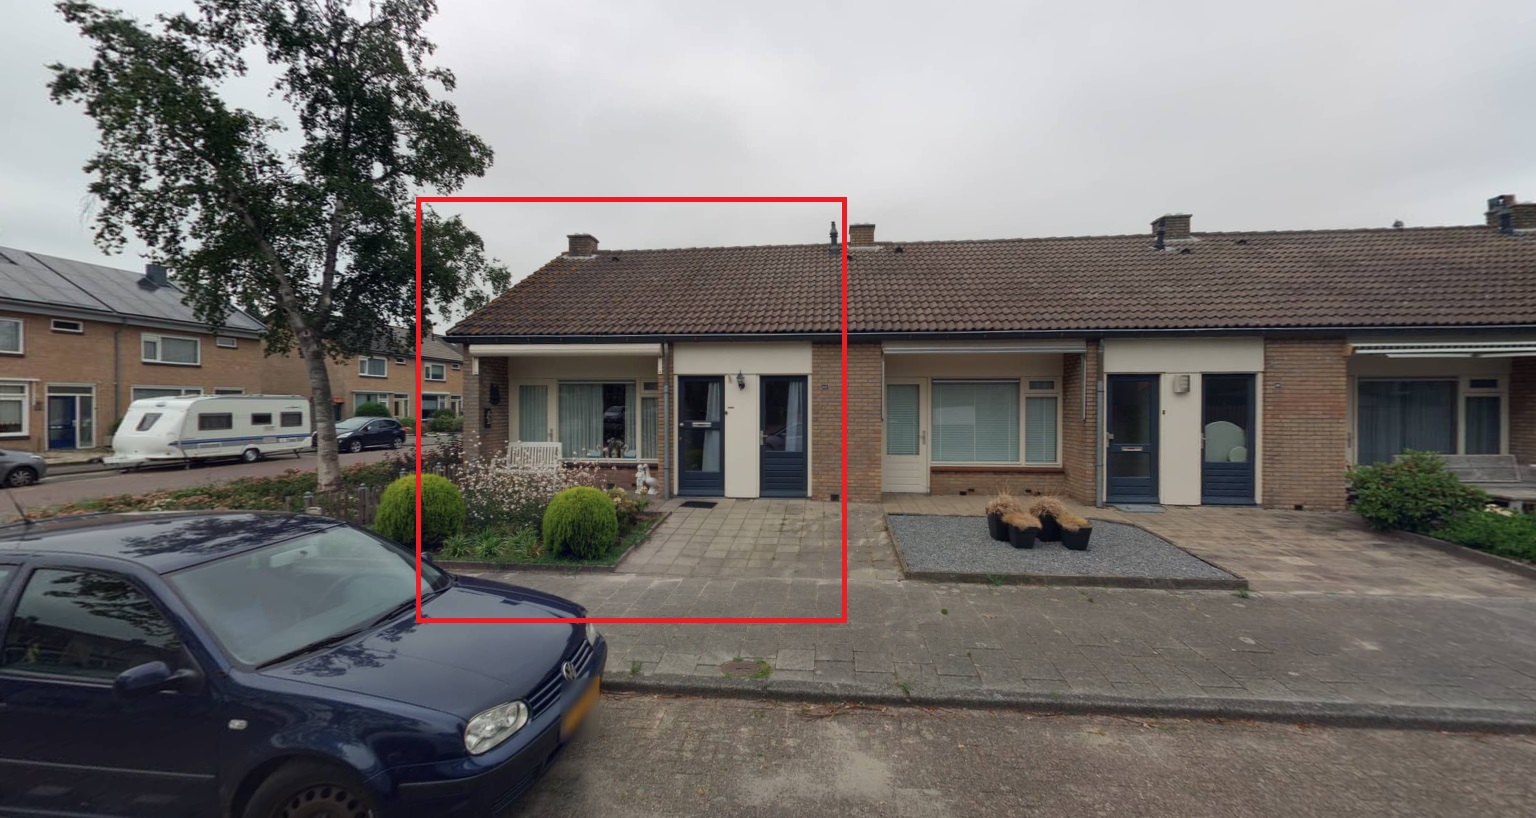 Hugo van der Goesstraat 62, 5171 XM Kaatsheuvel, Nederland